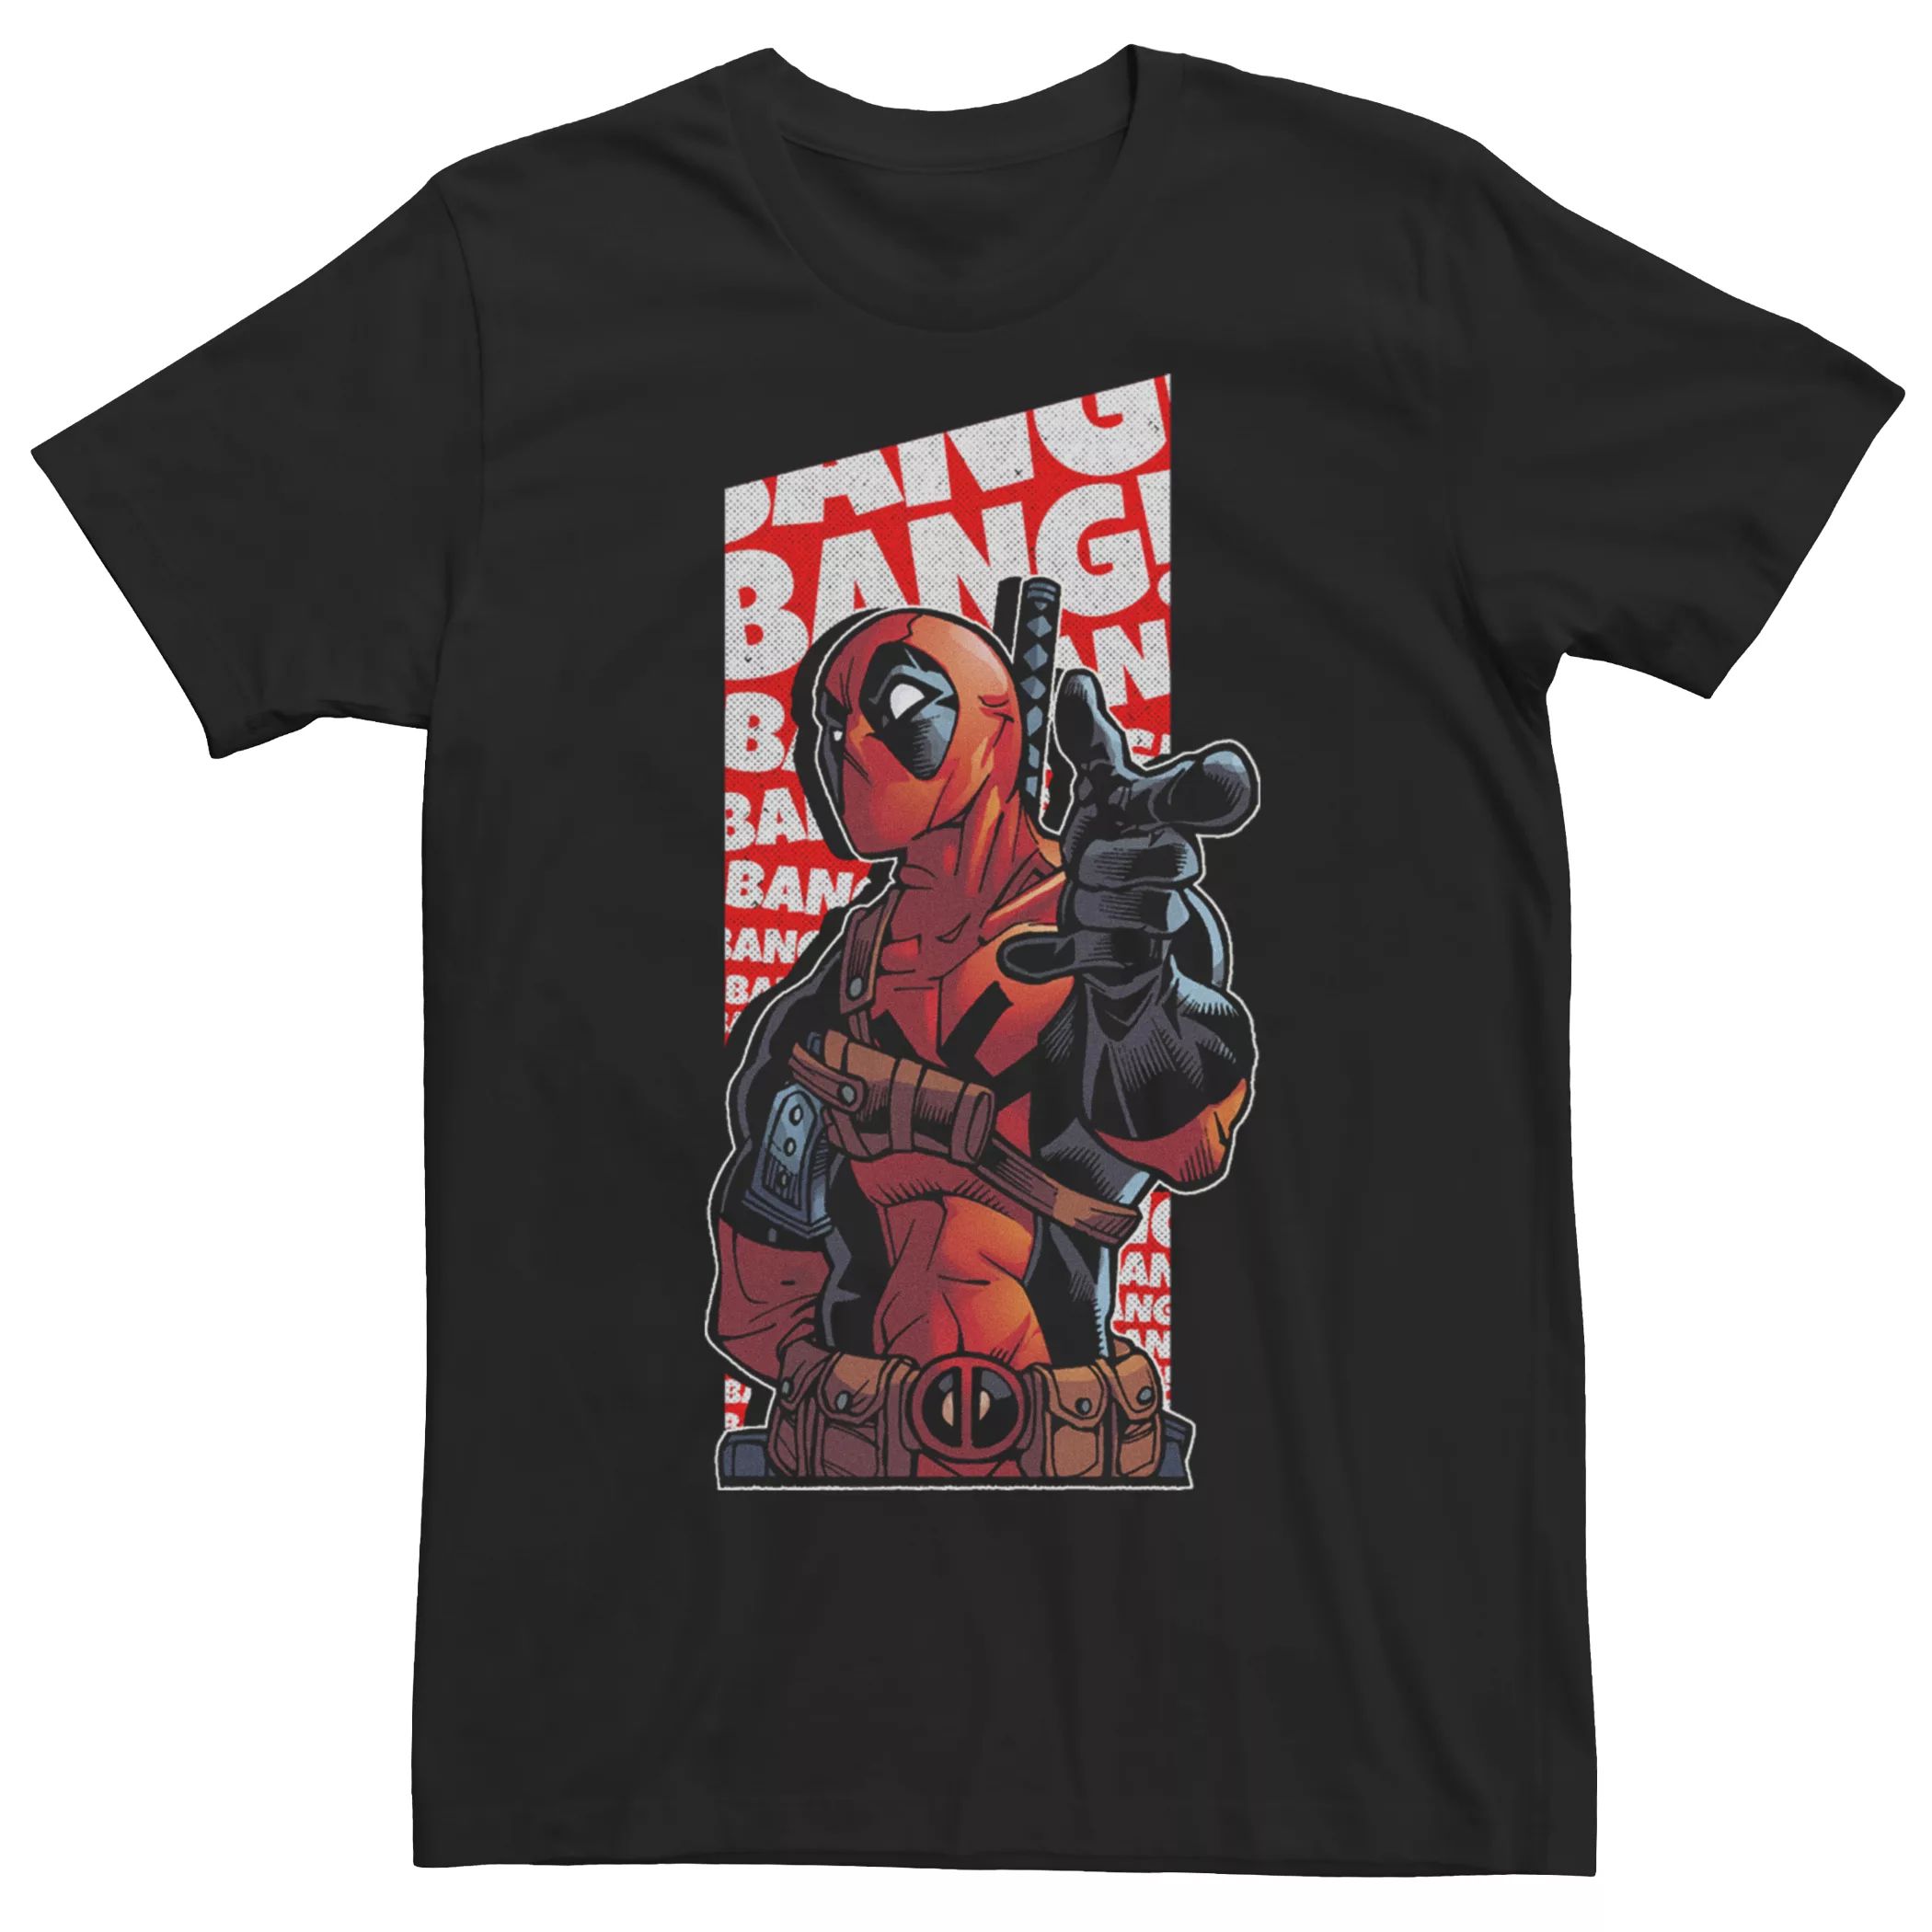 Мужская футболка Bang Bang Bang Bang с Дэдпулом из комиксов Marvel Licensed Character